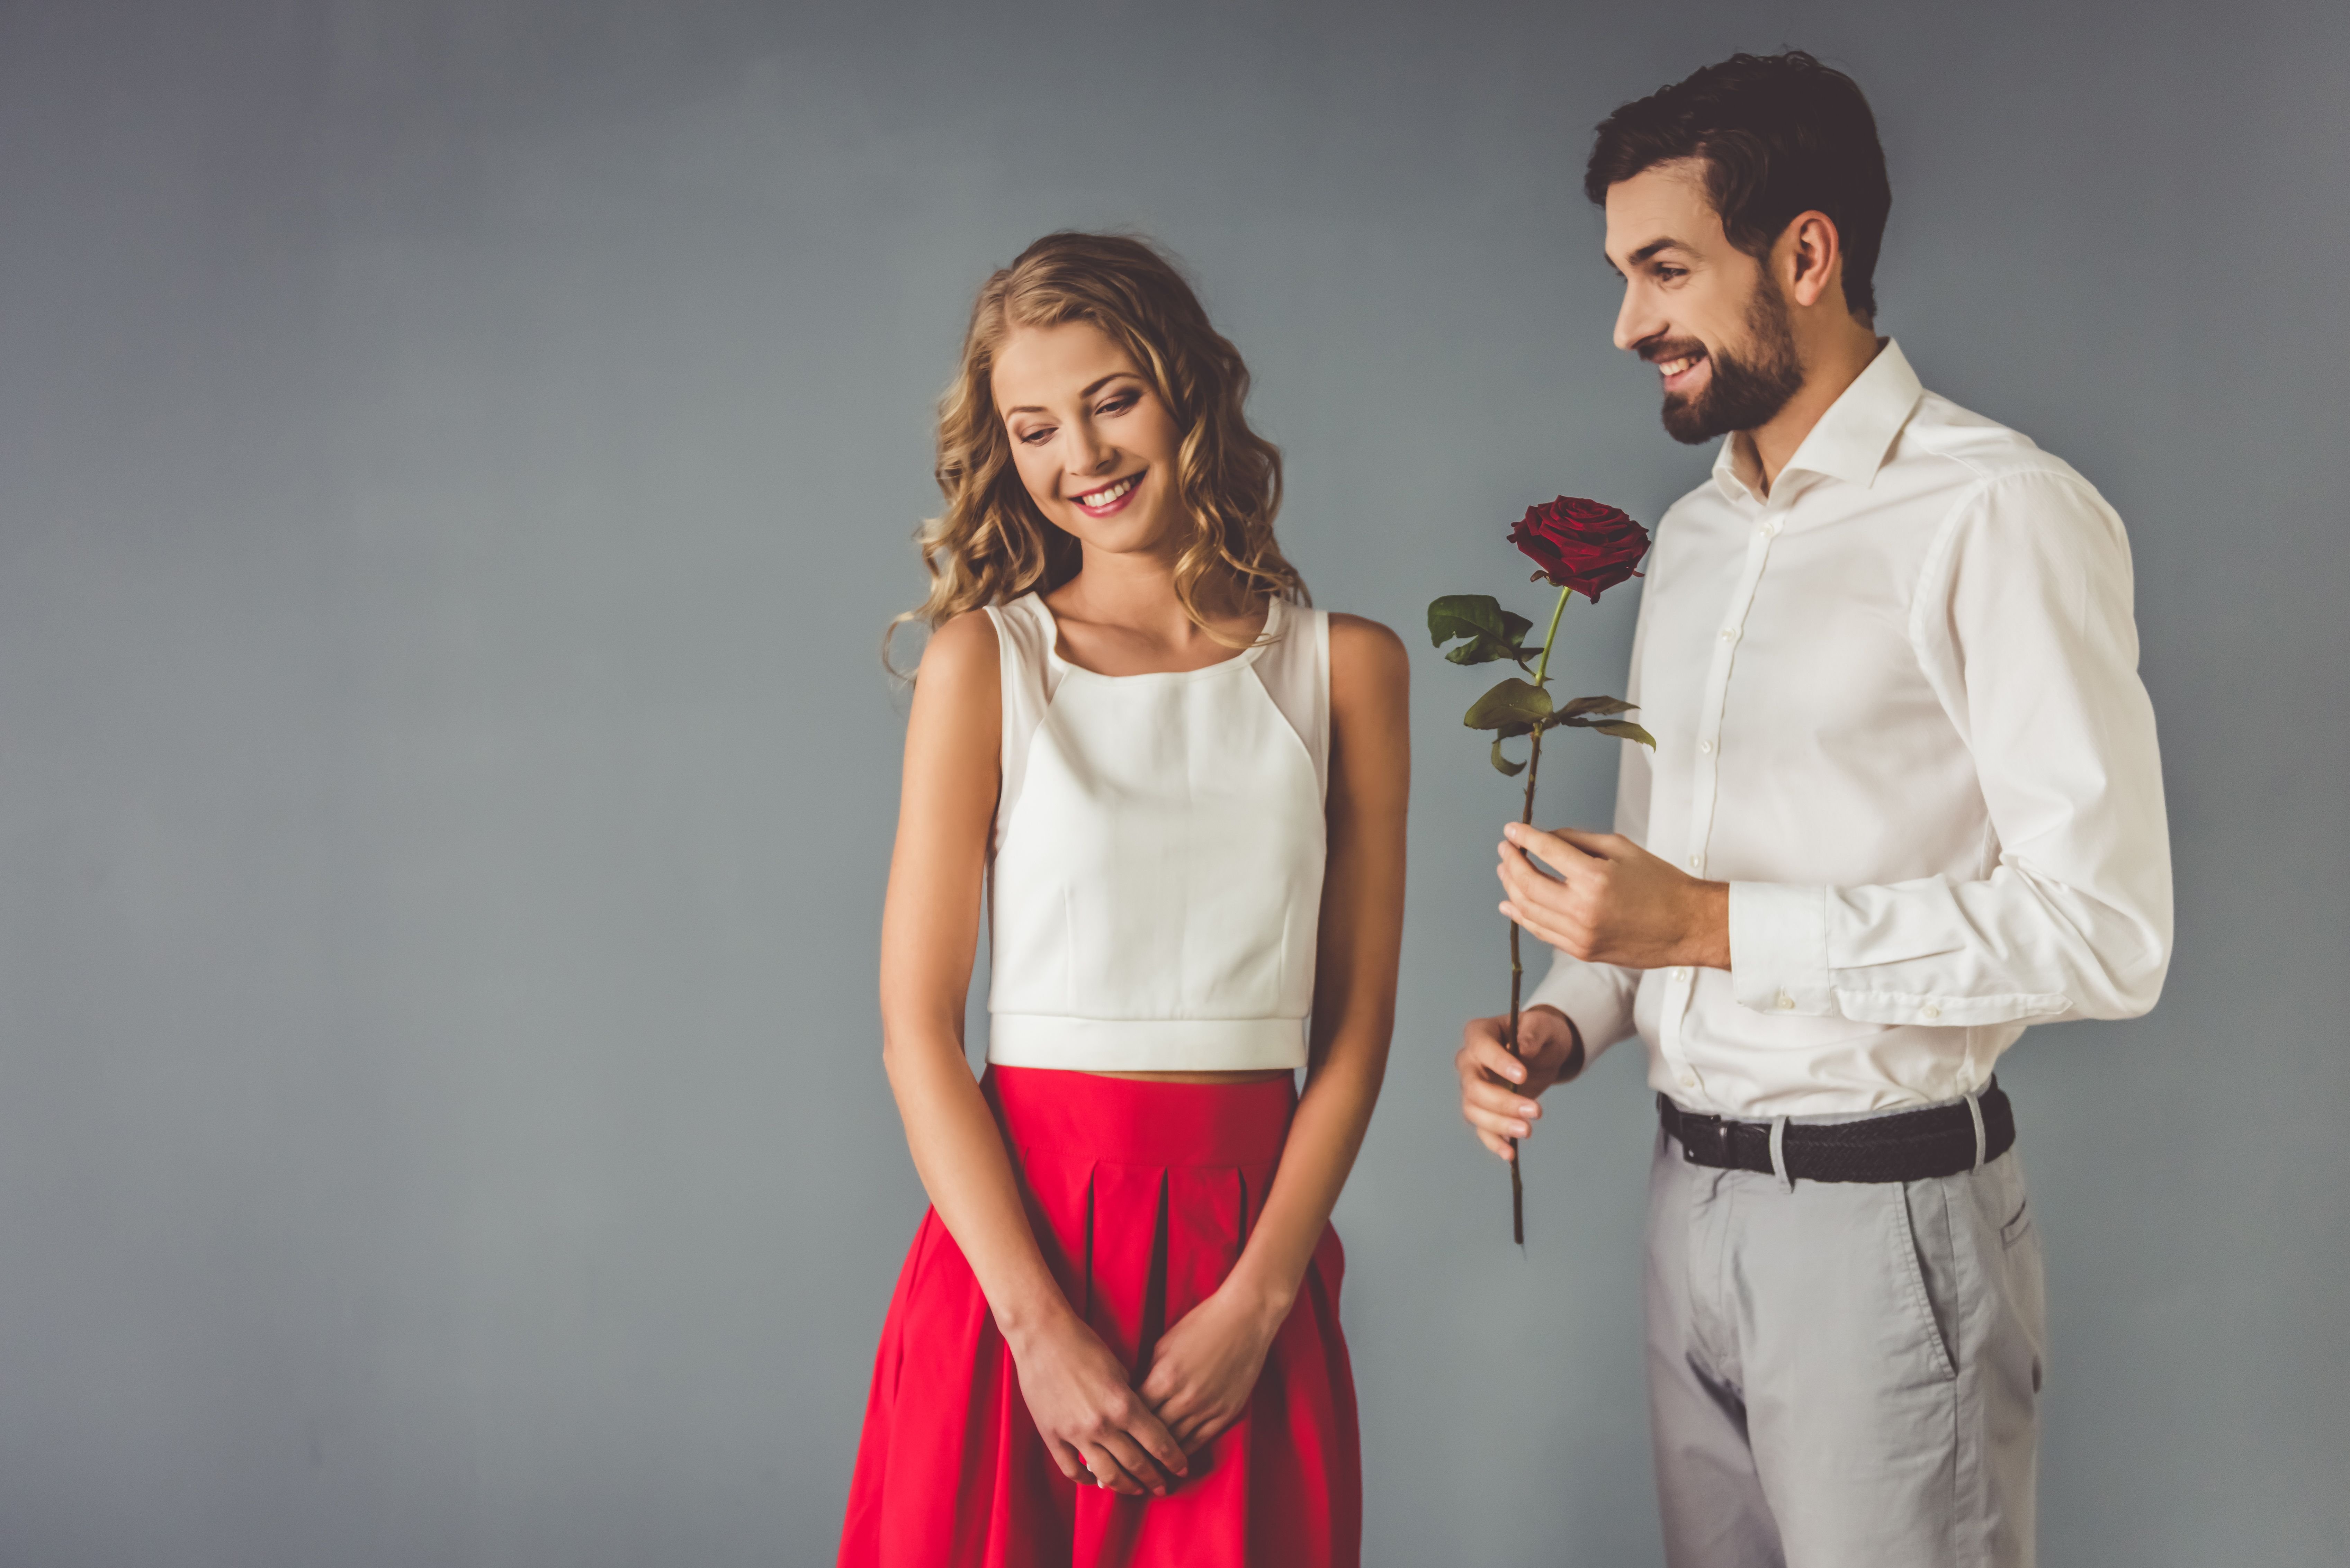 A man gives a woman a rose. | Source: Shutterstock